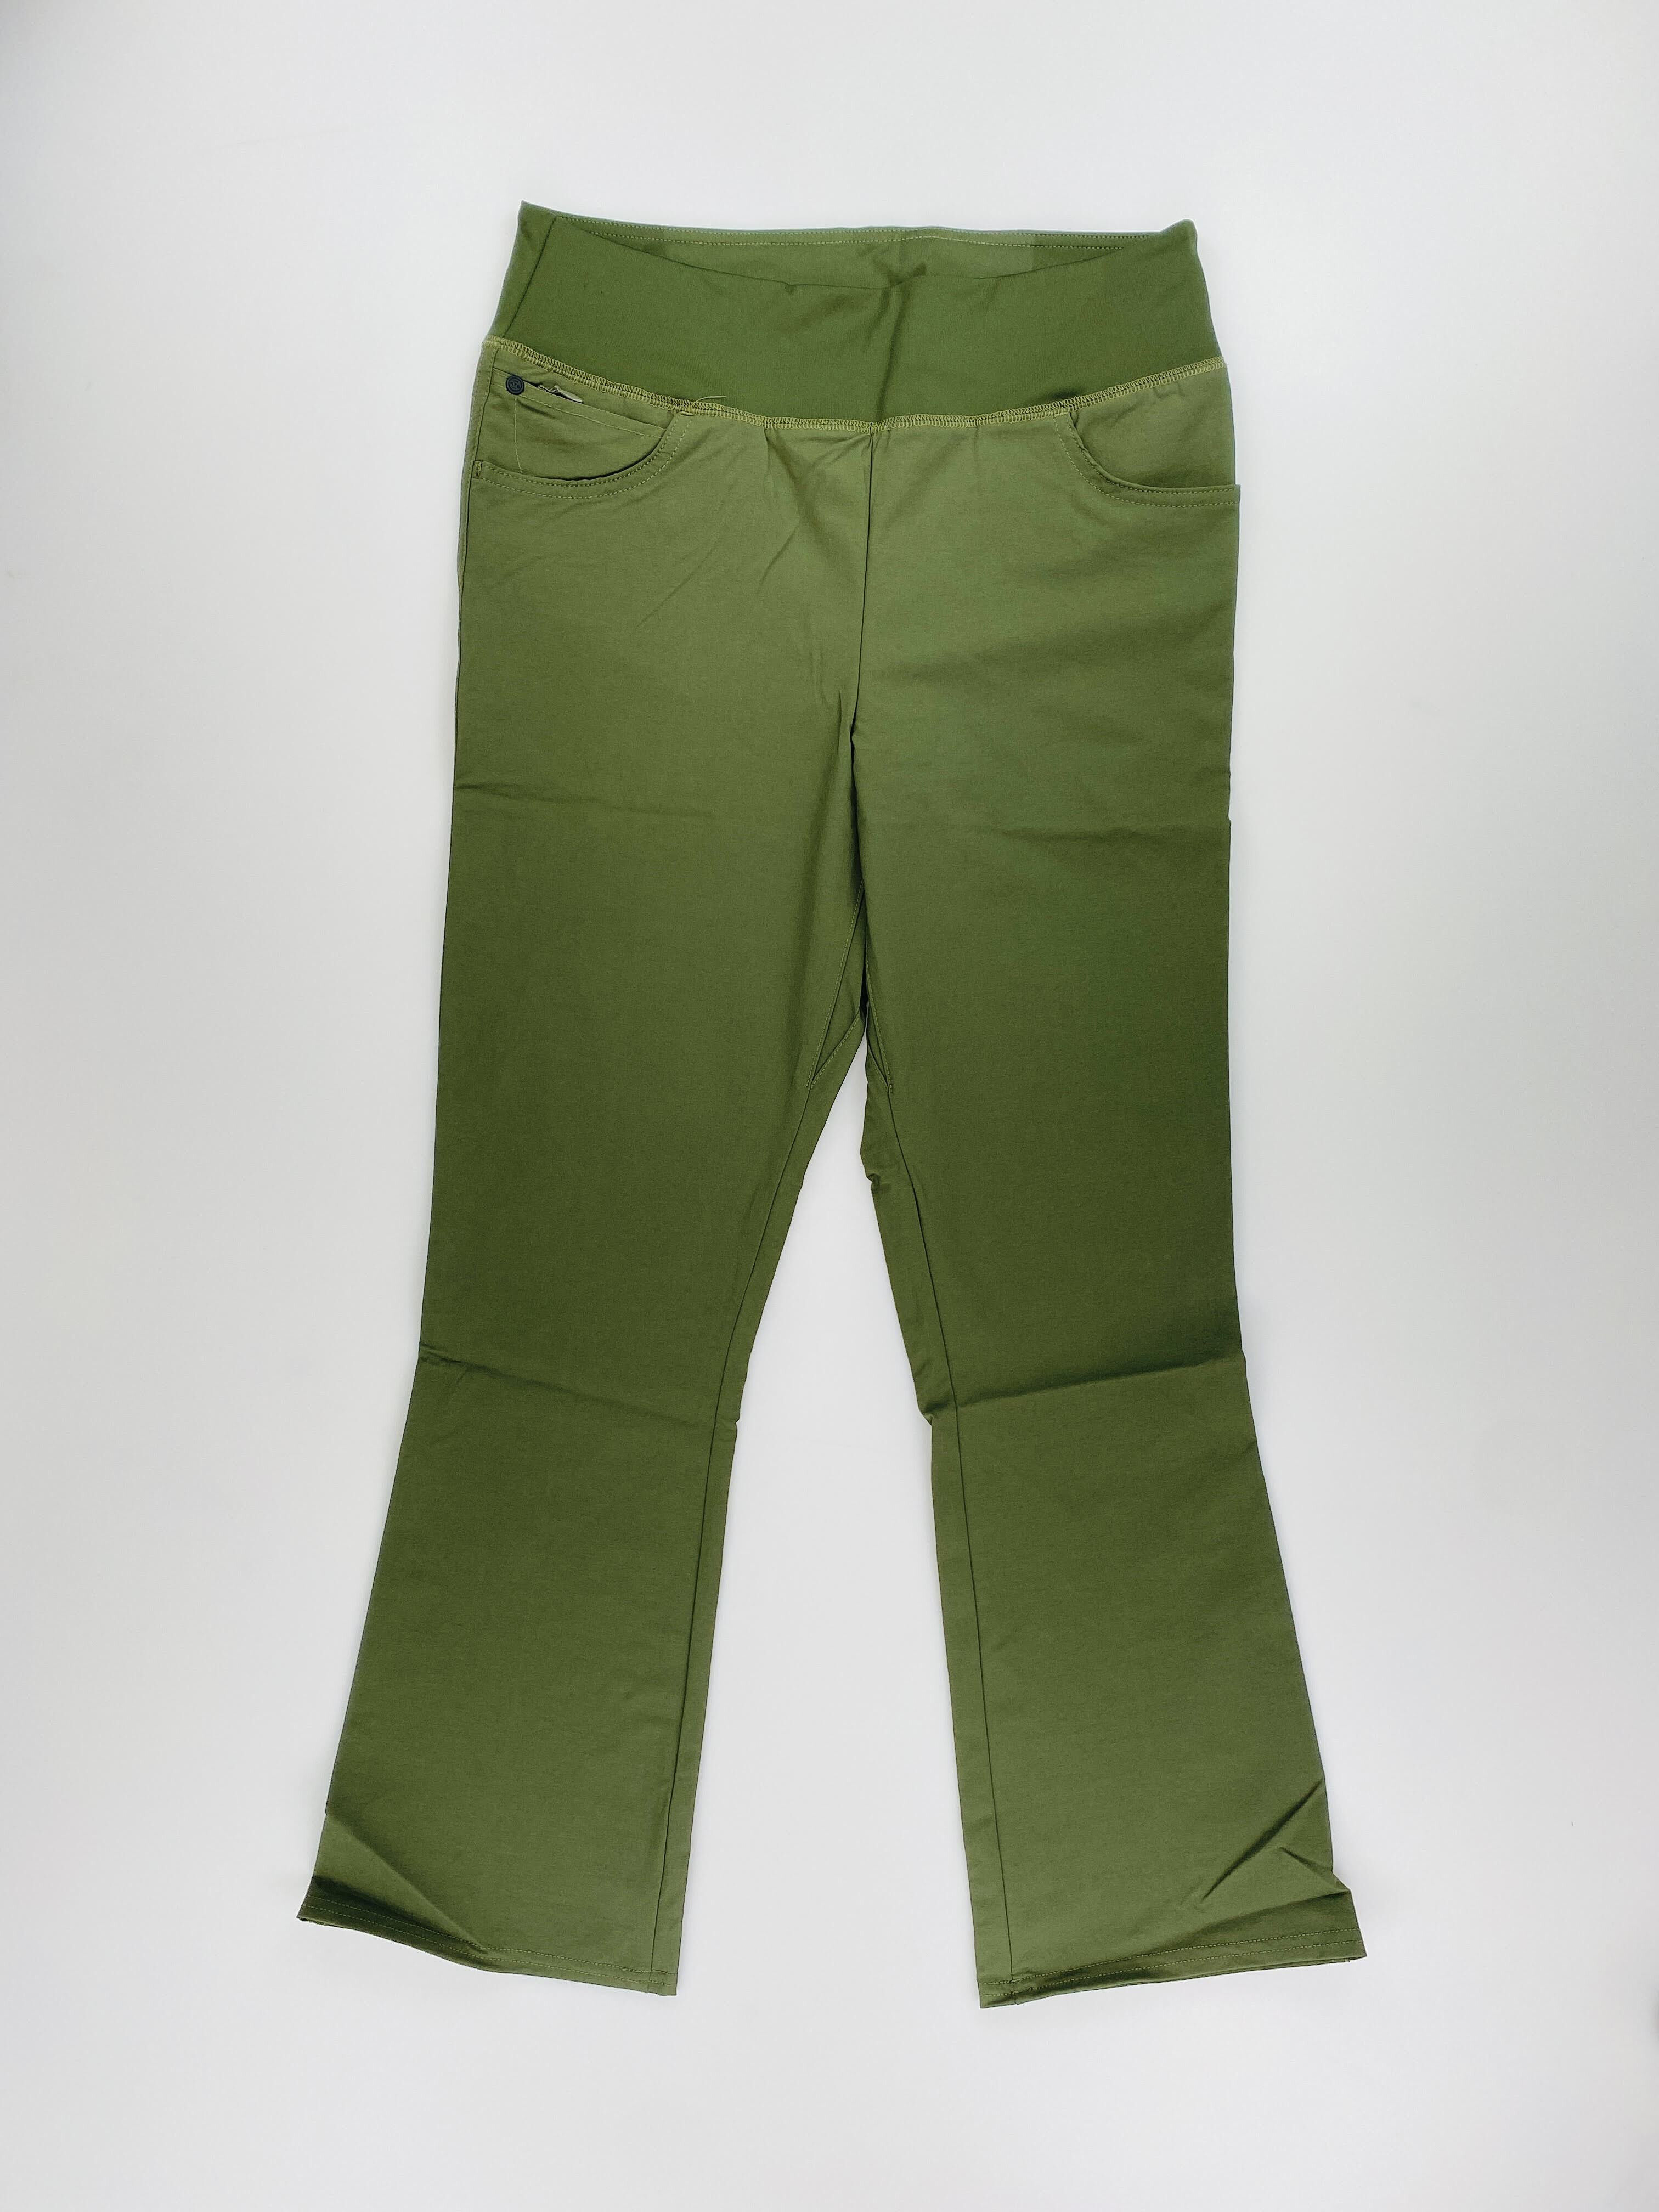 Wrangler Fwds Kick Flare - Second Hand Walking trousers - Women's - Vert olive - US 28 | Hardloop